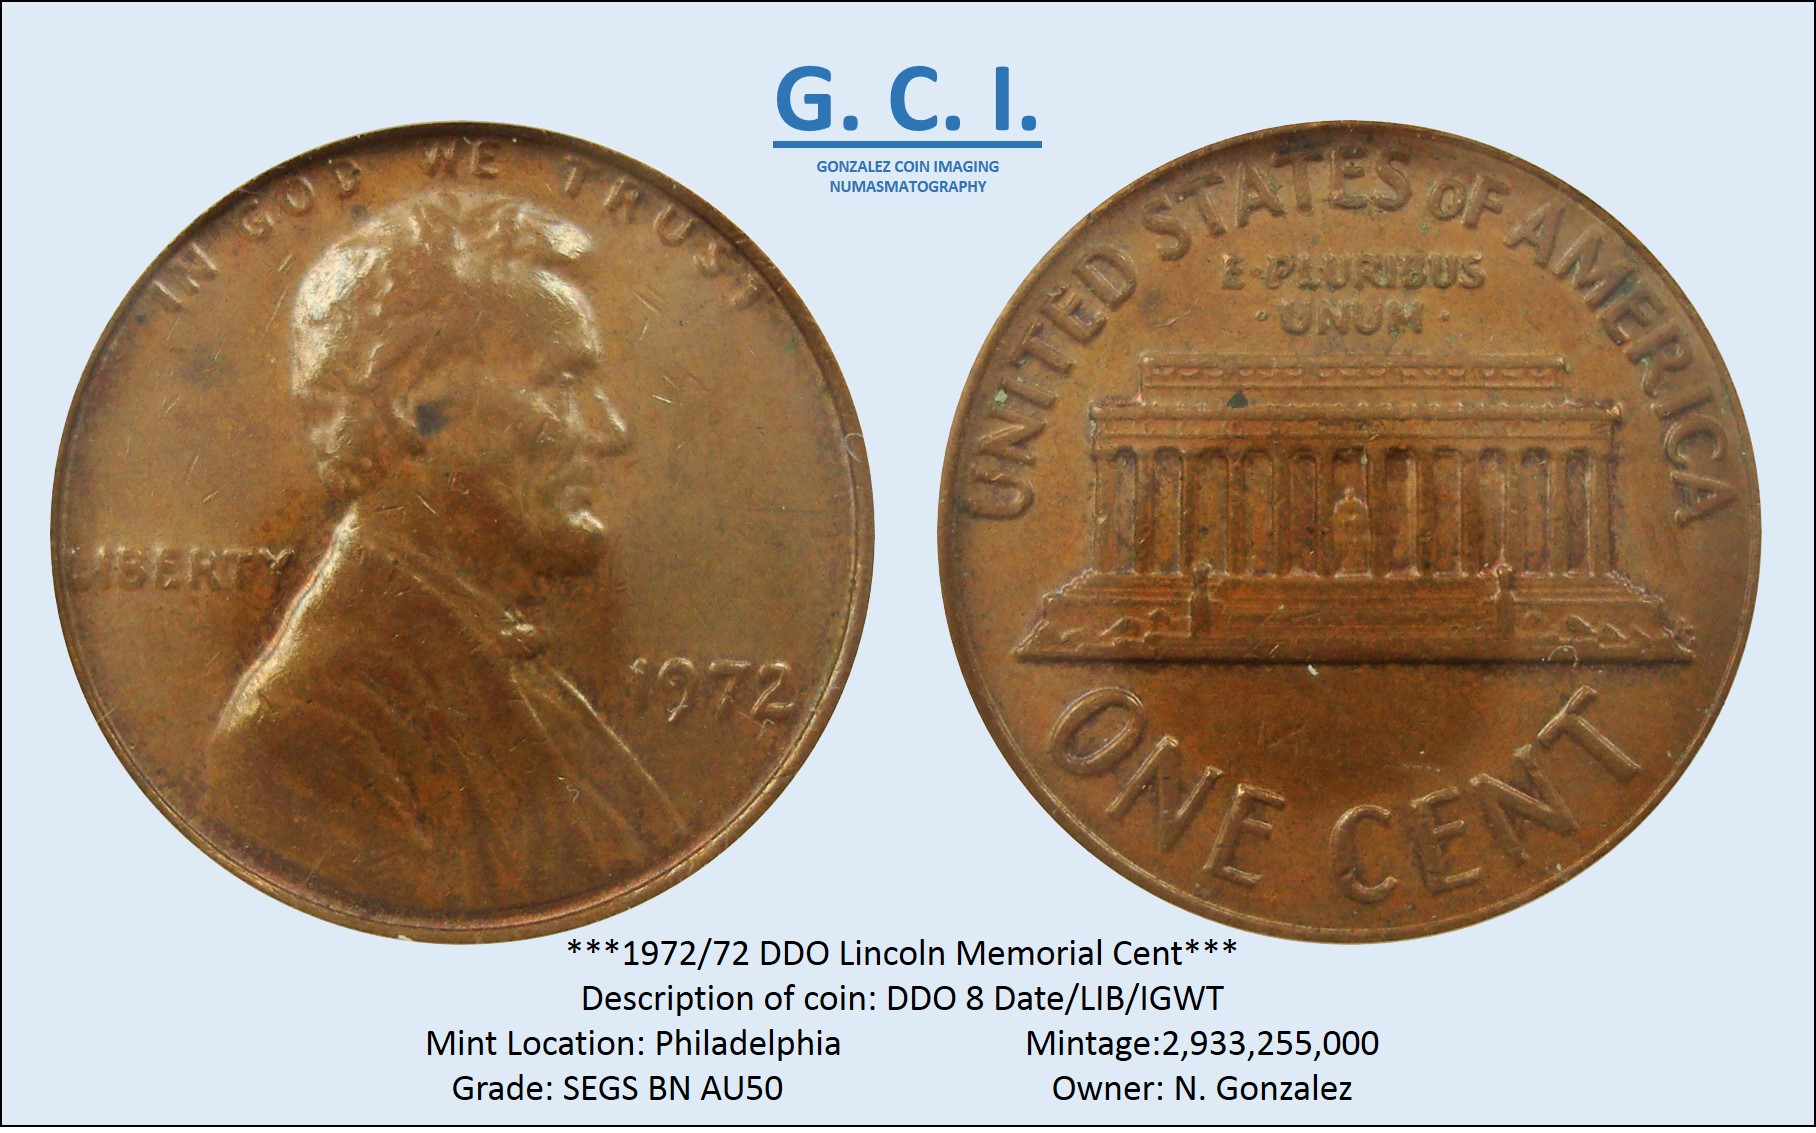 1972 DDO Lincoln Memorial GCI Image.jpg